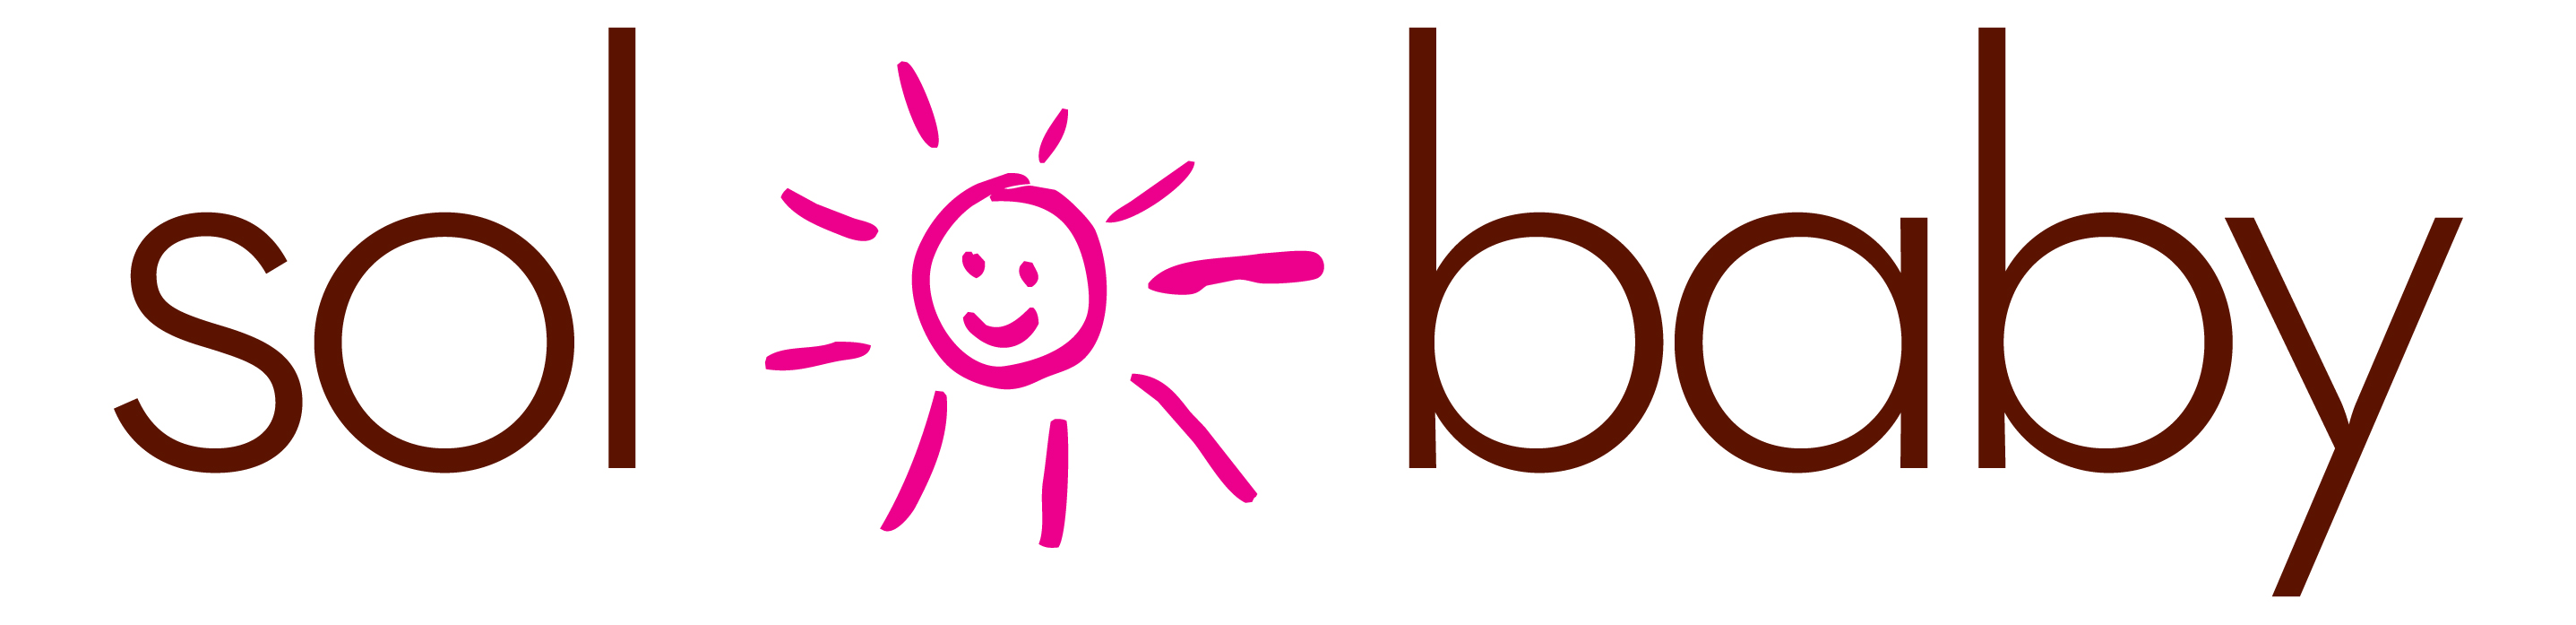 sol-baby-logo-good